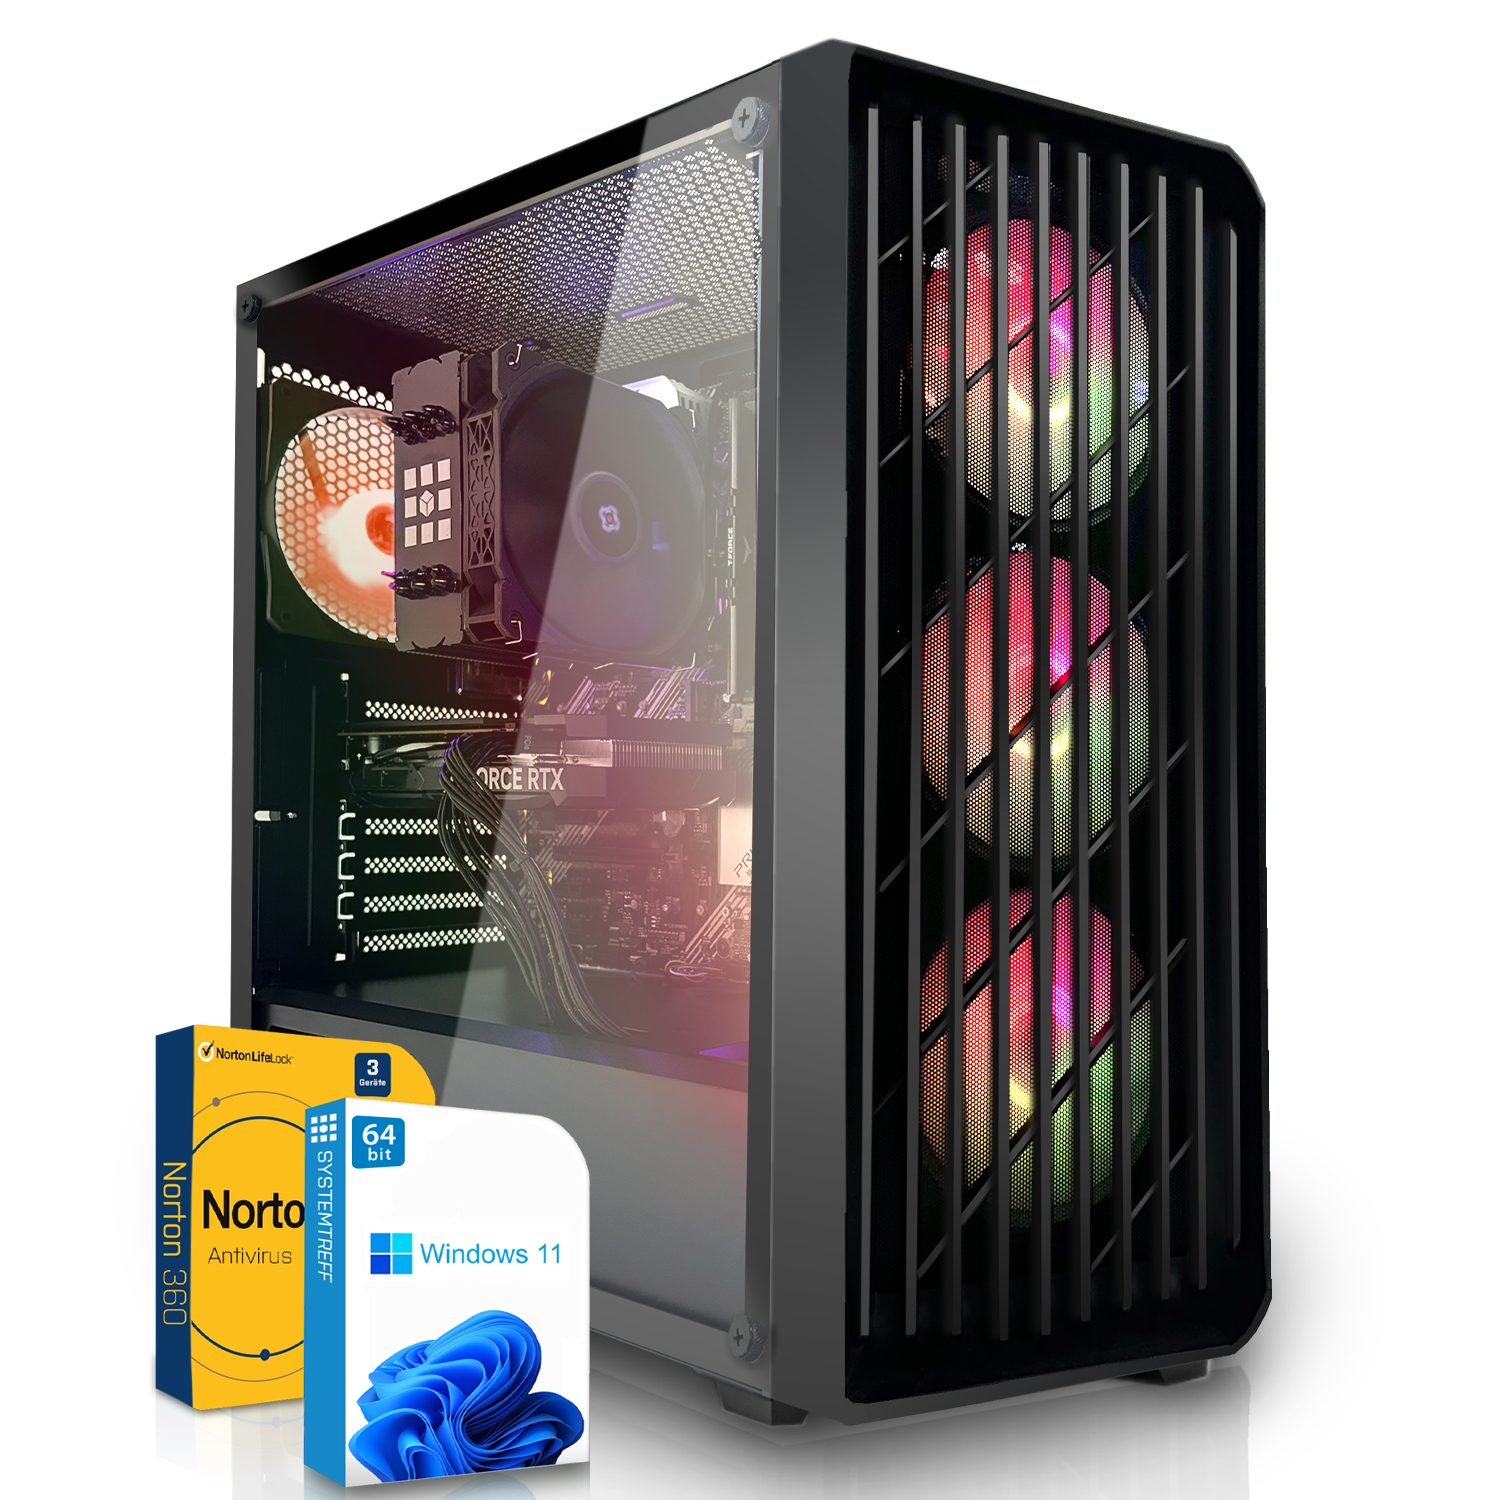 Windows GB SYSTEMTREFF mit Radeon™ GB AMD Gaming PC Intel Gaming i7 512 11 Intel® i7-10700KF, 6600 Core Pro, RAM, Core™ mSSD, 16 Prozessor, RX